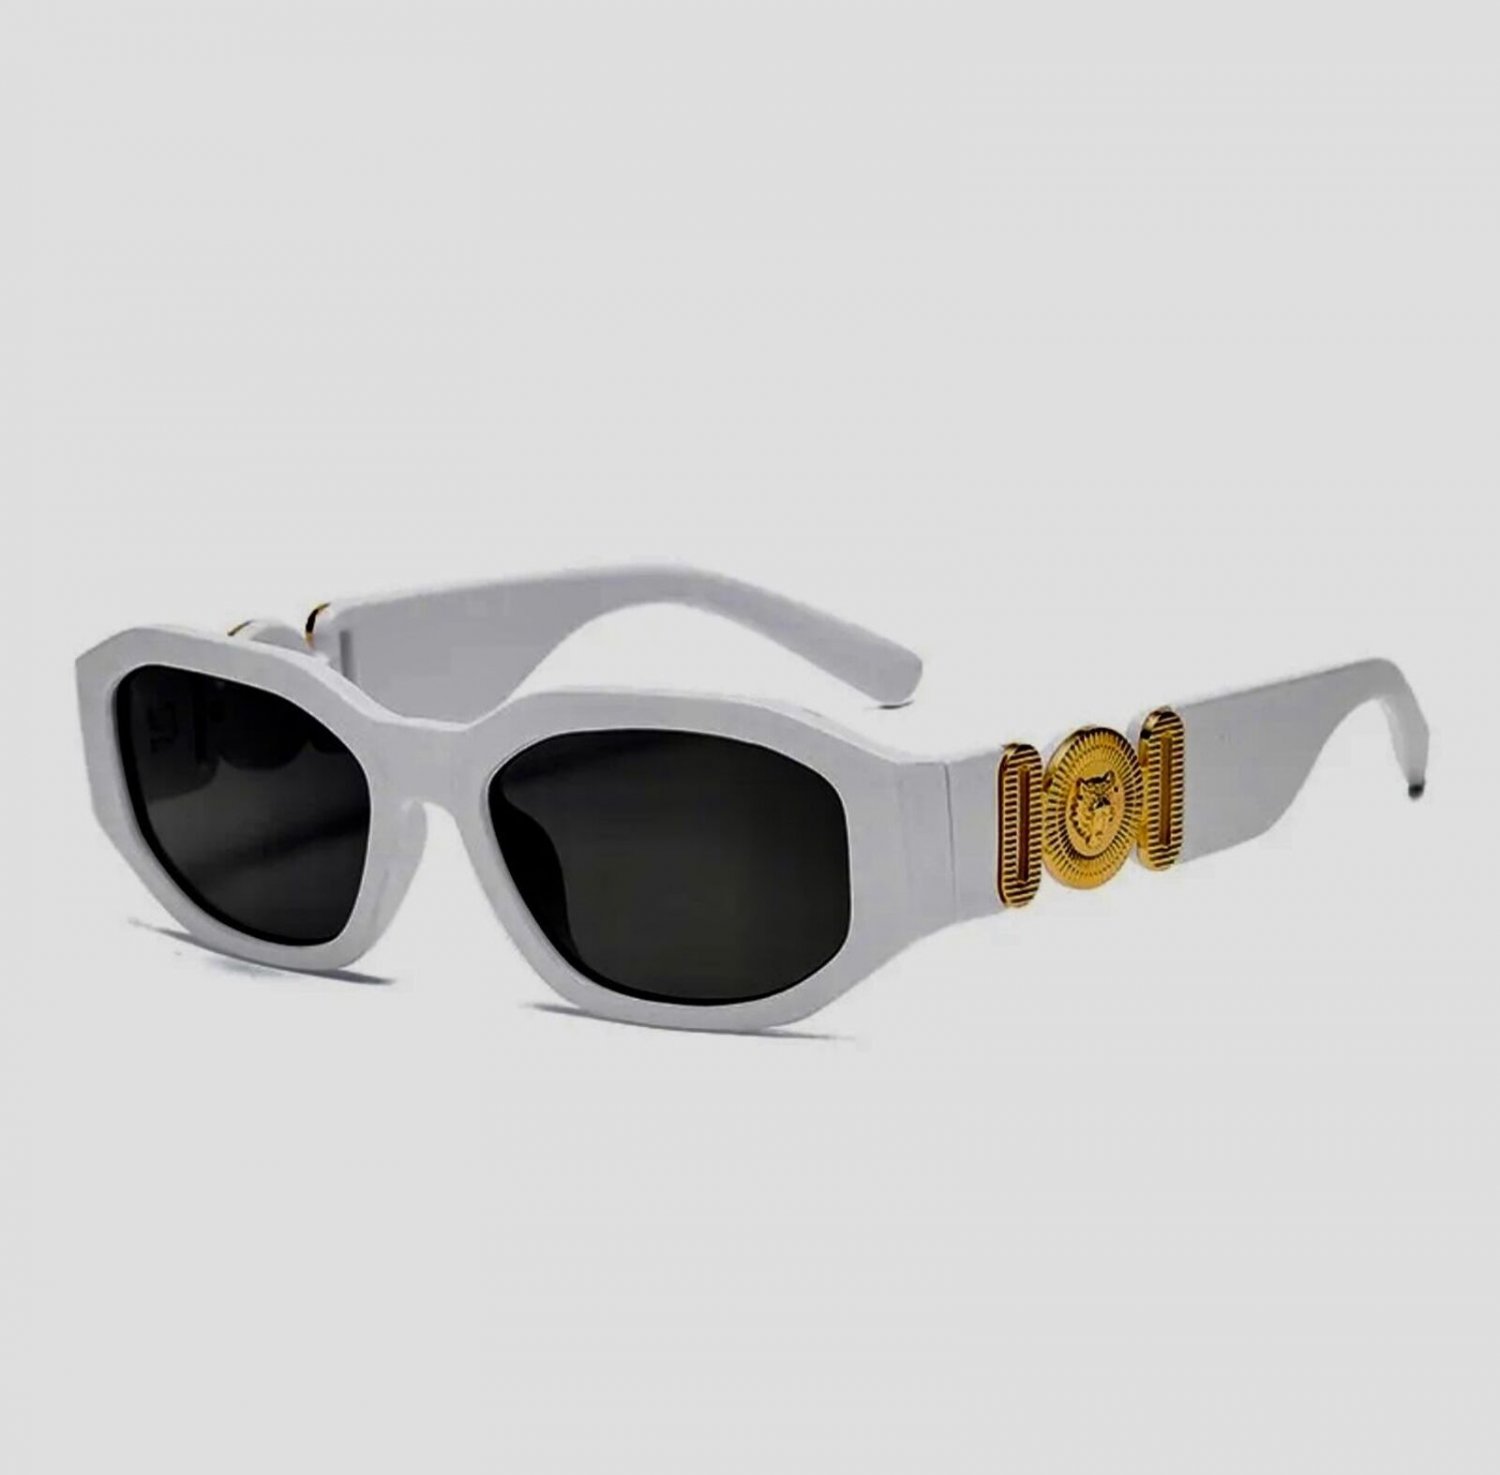 New Retro Irregular Square Sunglasses for Women Men Fashion